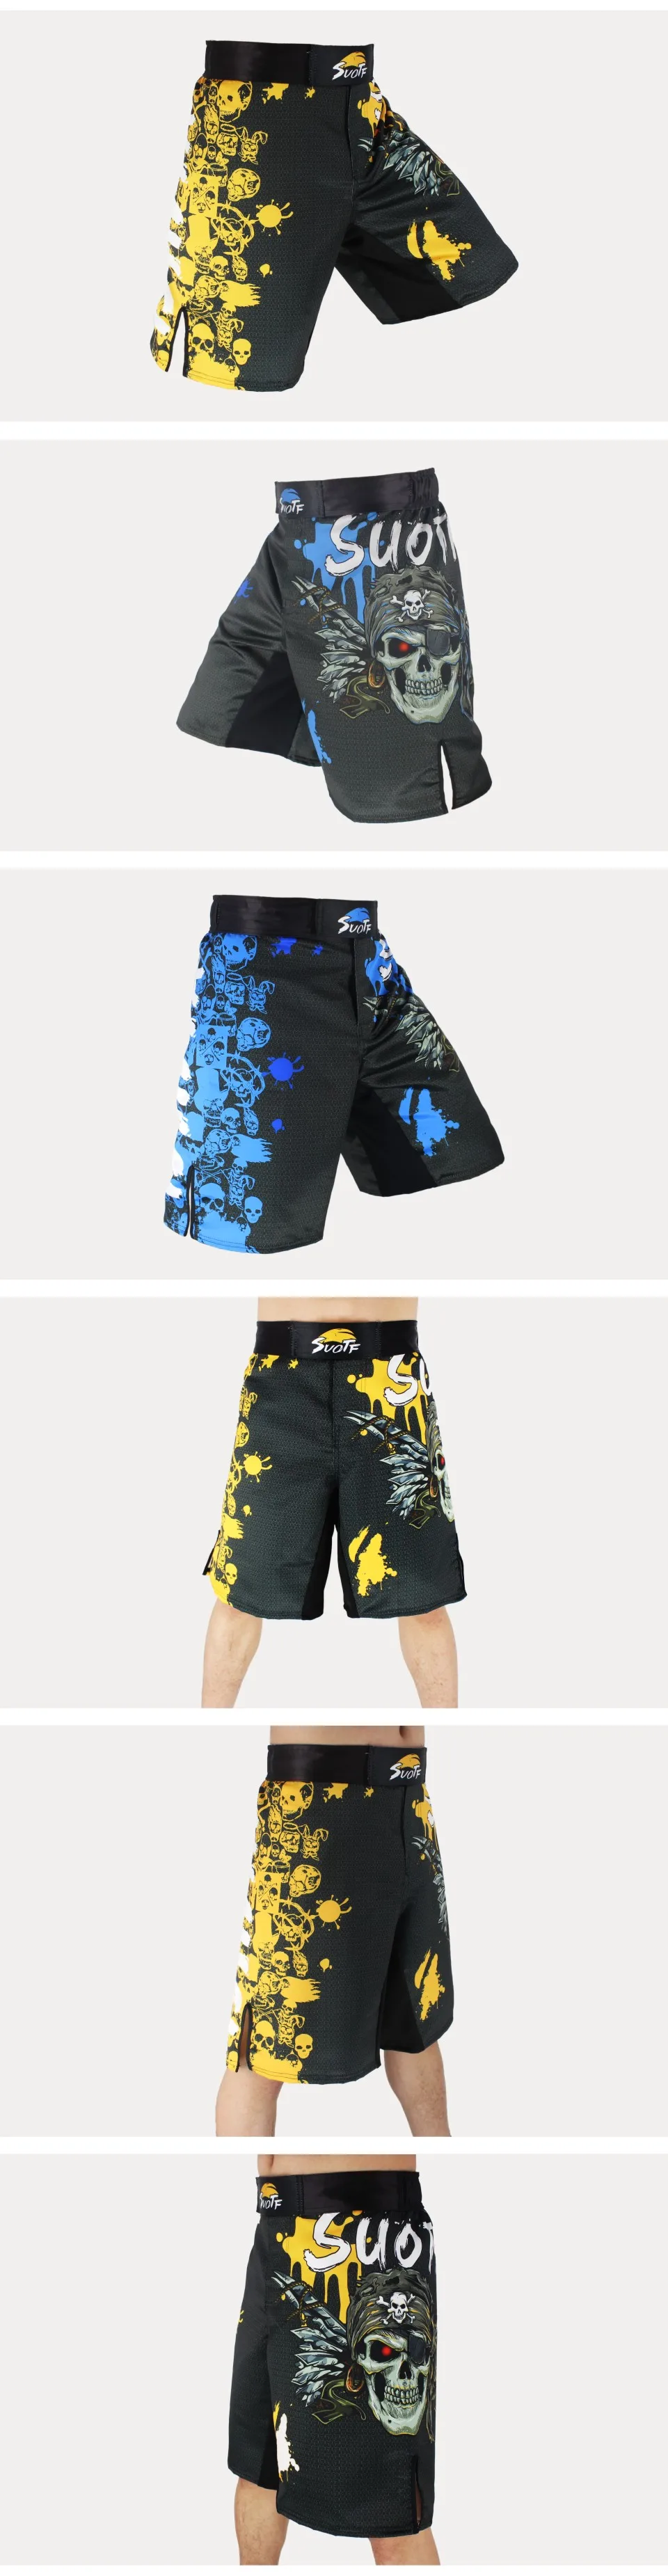 M-3XL мужские штаны для серфинга Shogun Rua Edition Fight MMA шорты для тайского бокса шорты для кикбоксинга